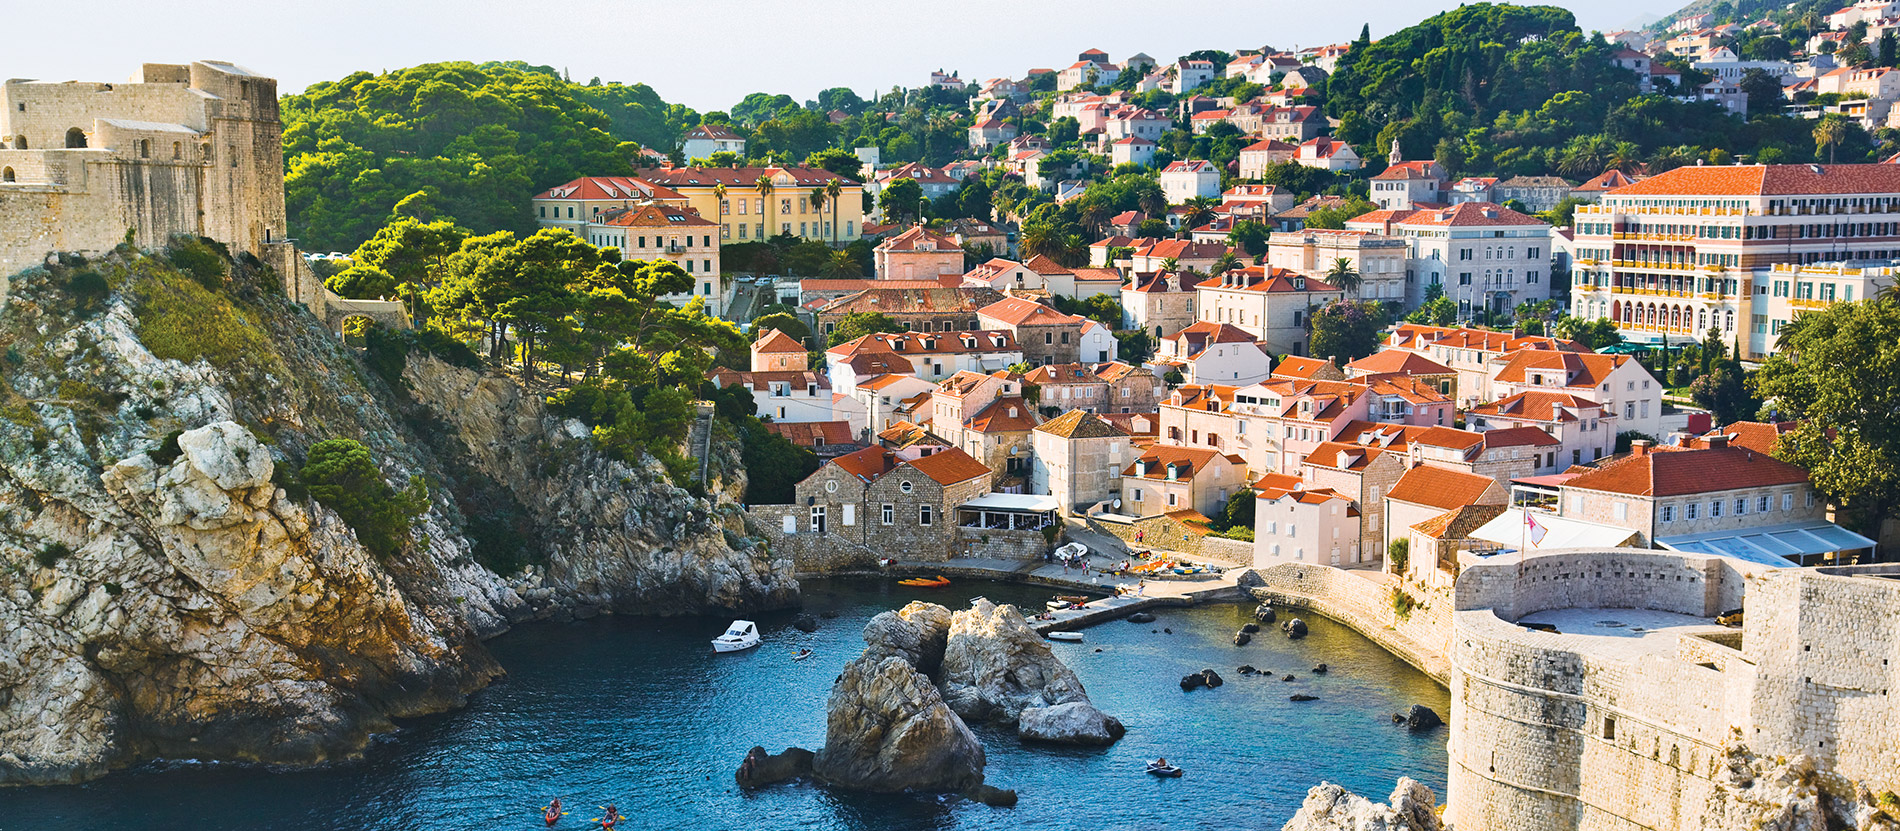 Cruise the Adriatic Sea from Dubrovnik - Dalmatian islands